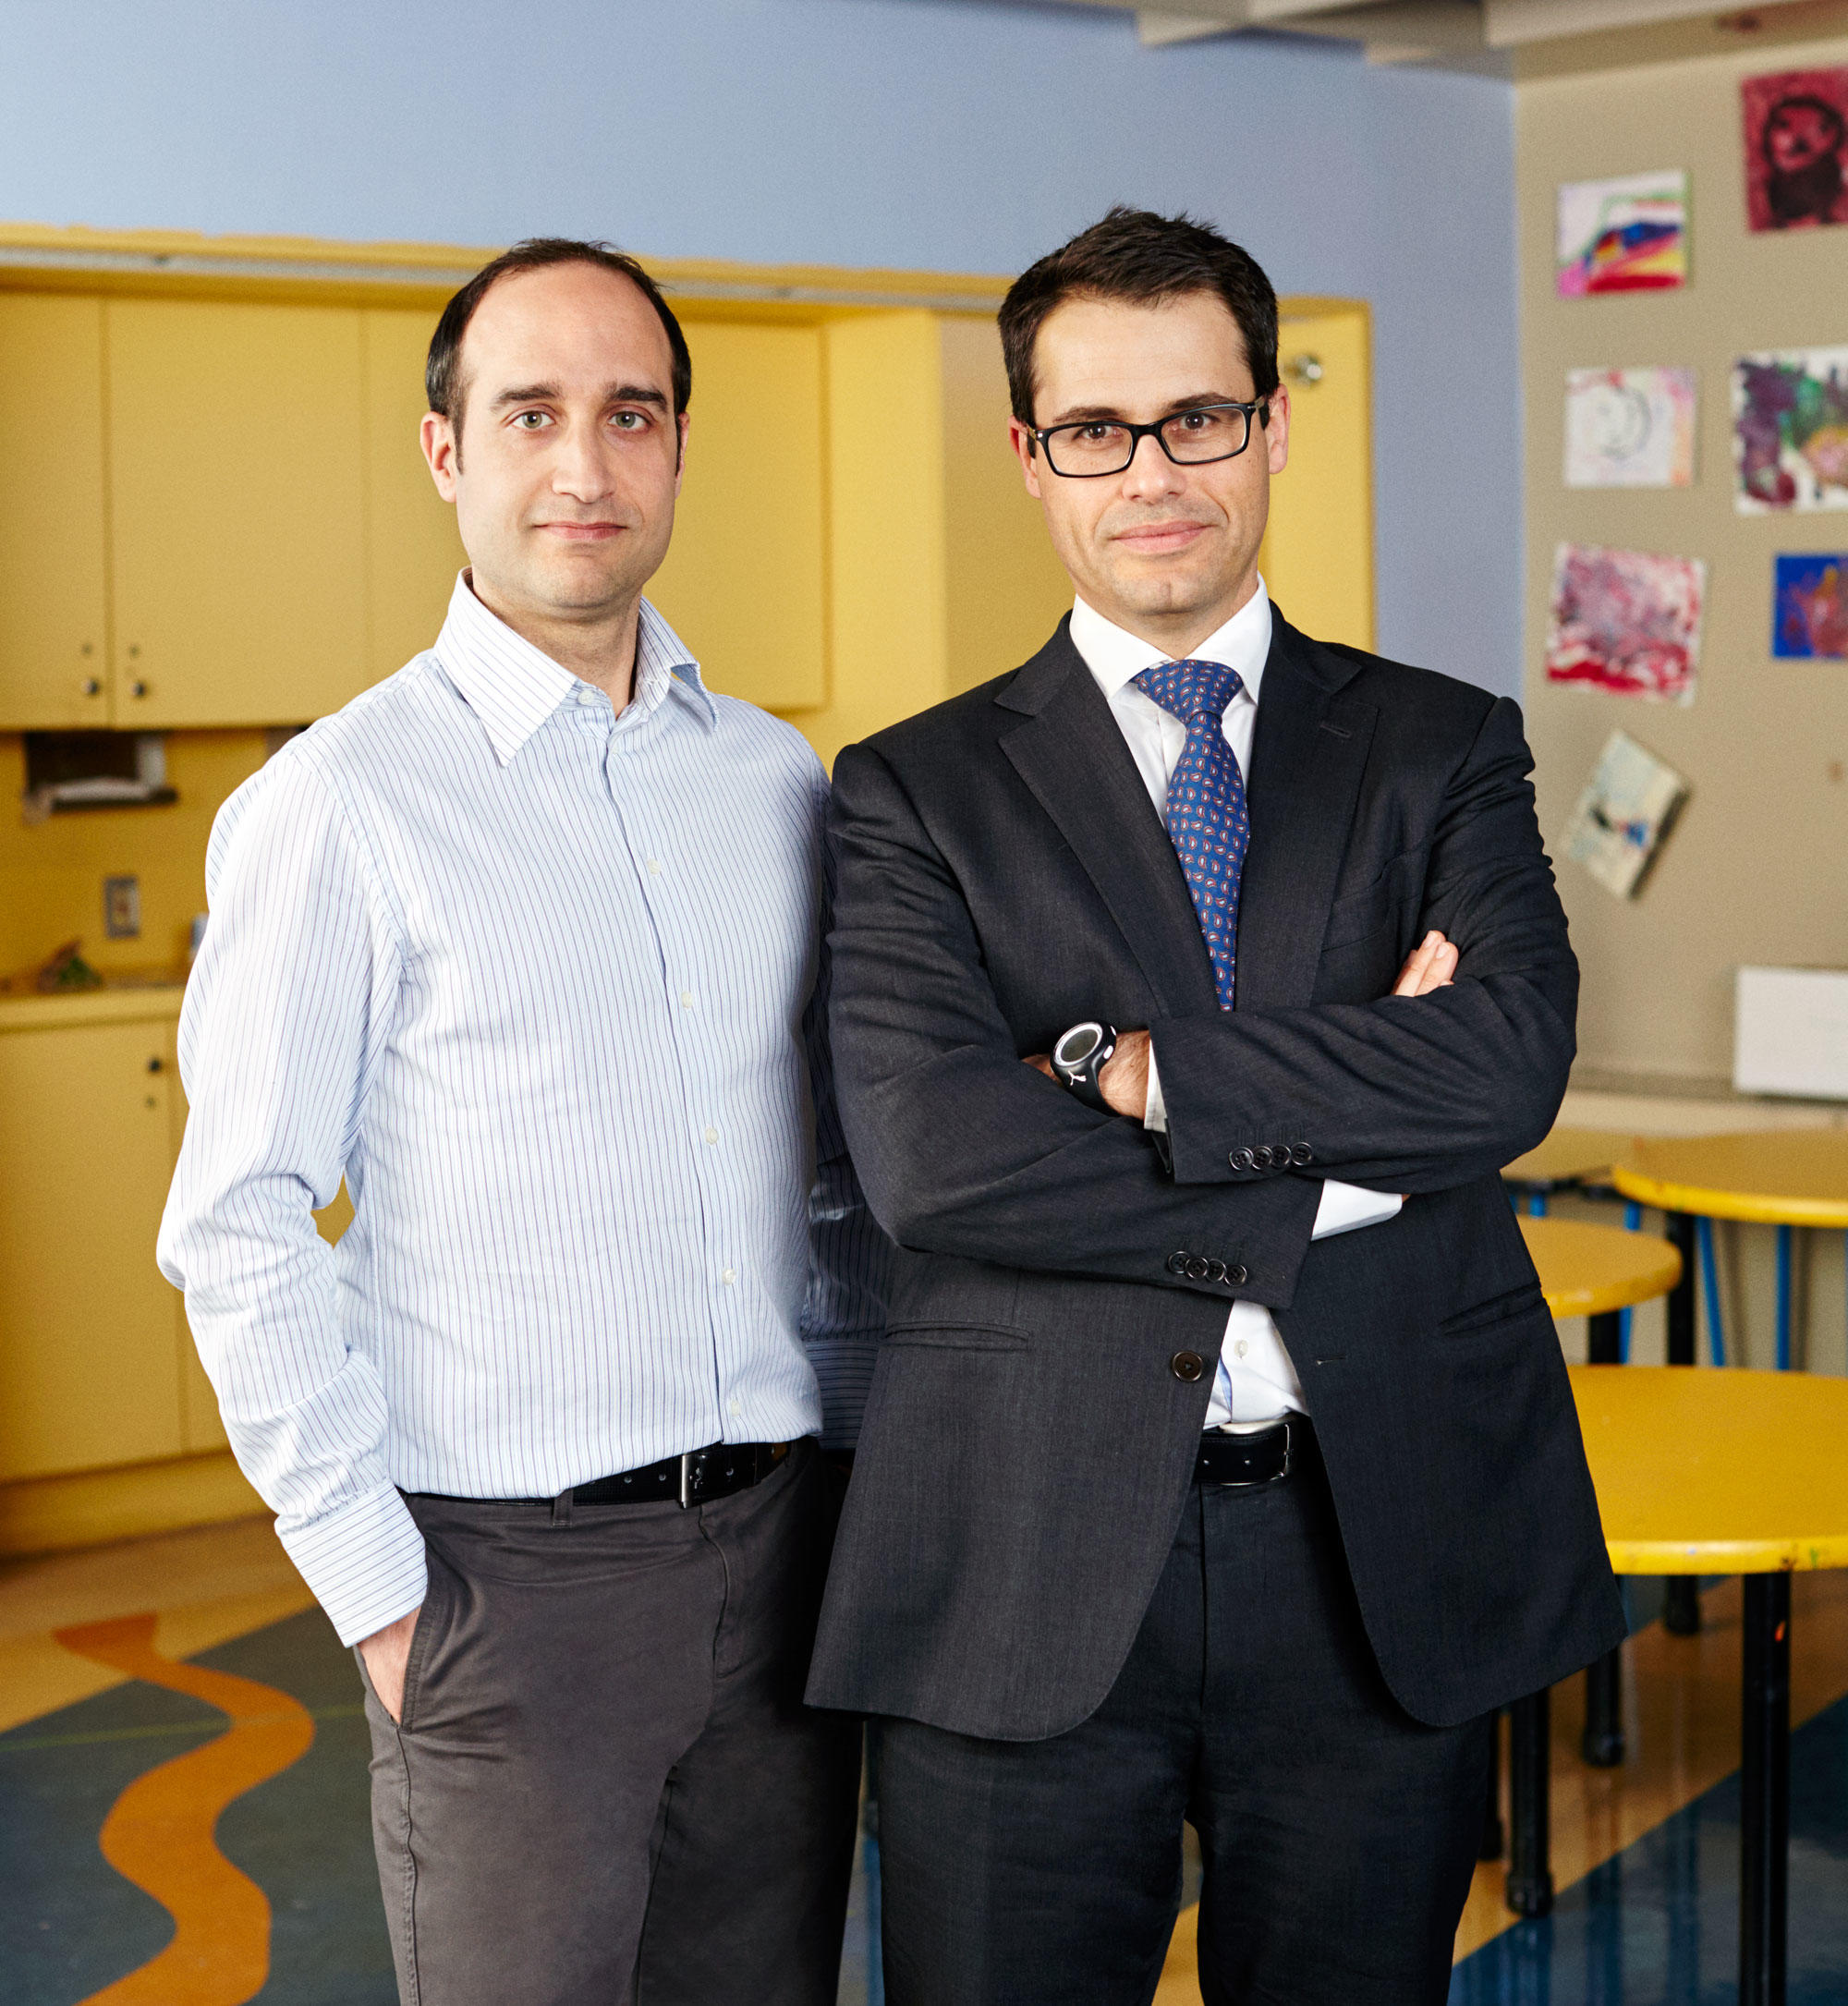 Leukemia researchers Alberto Ambesi-Impiombato and Adolfo Ferrando